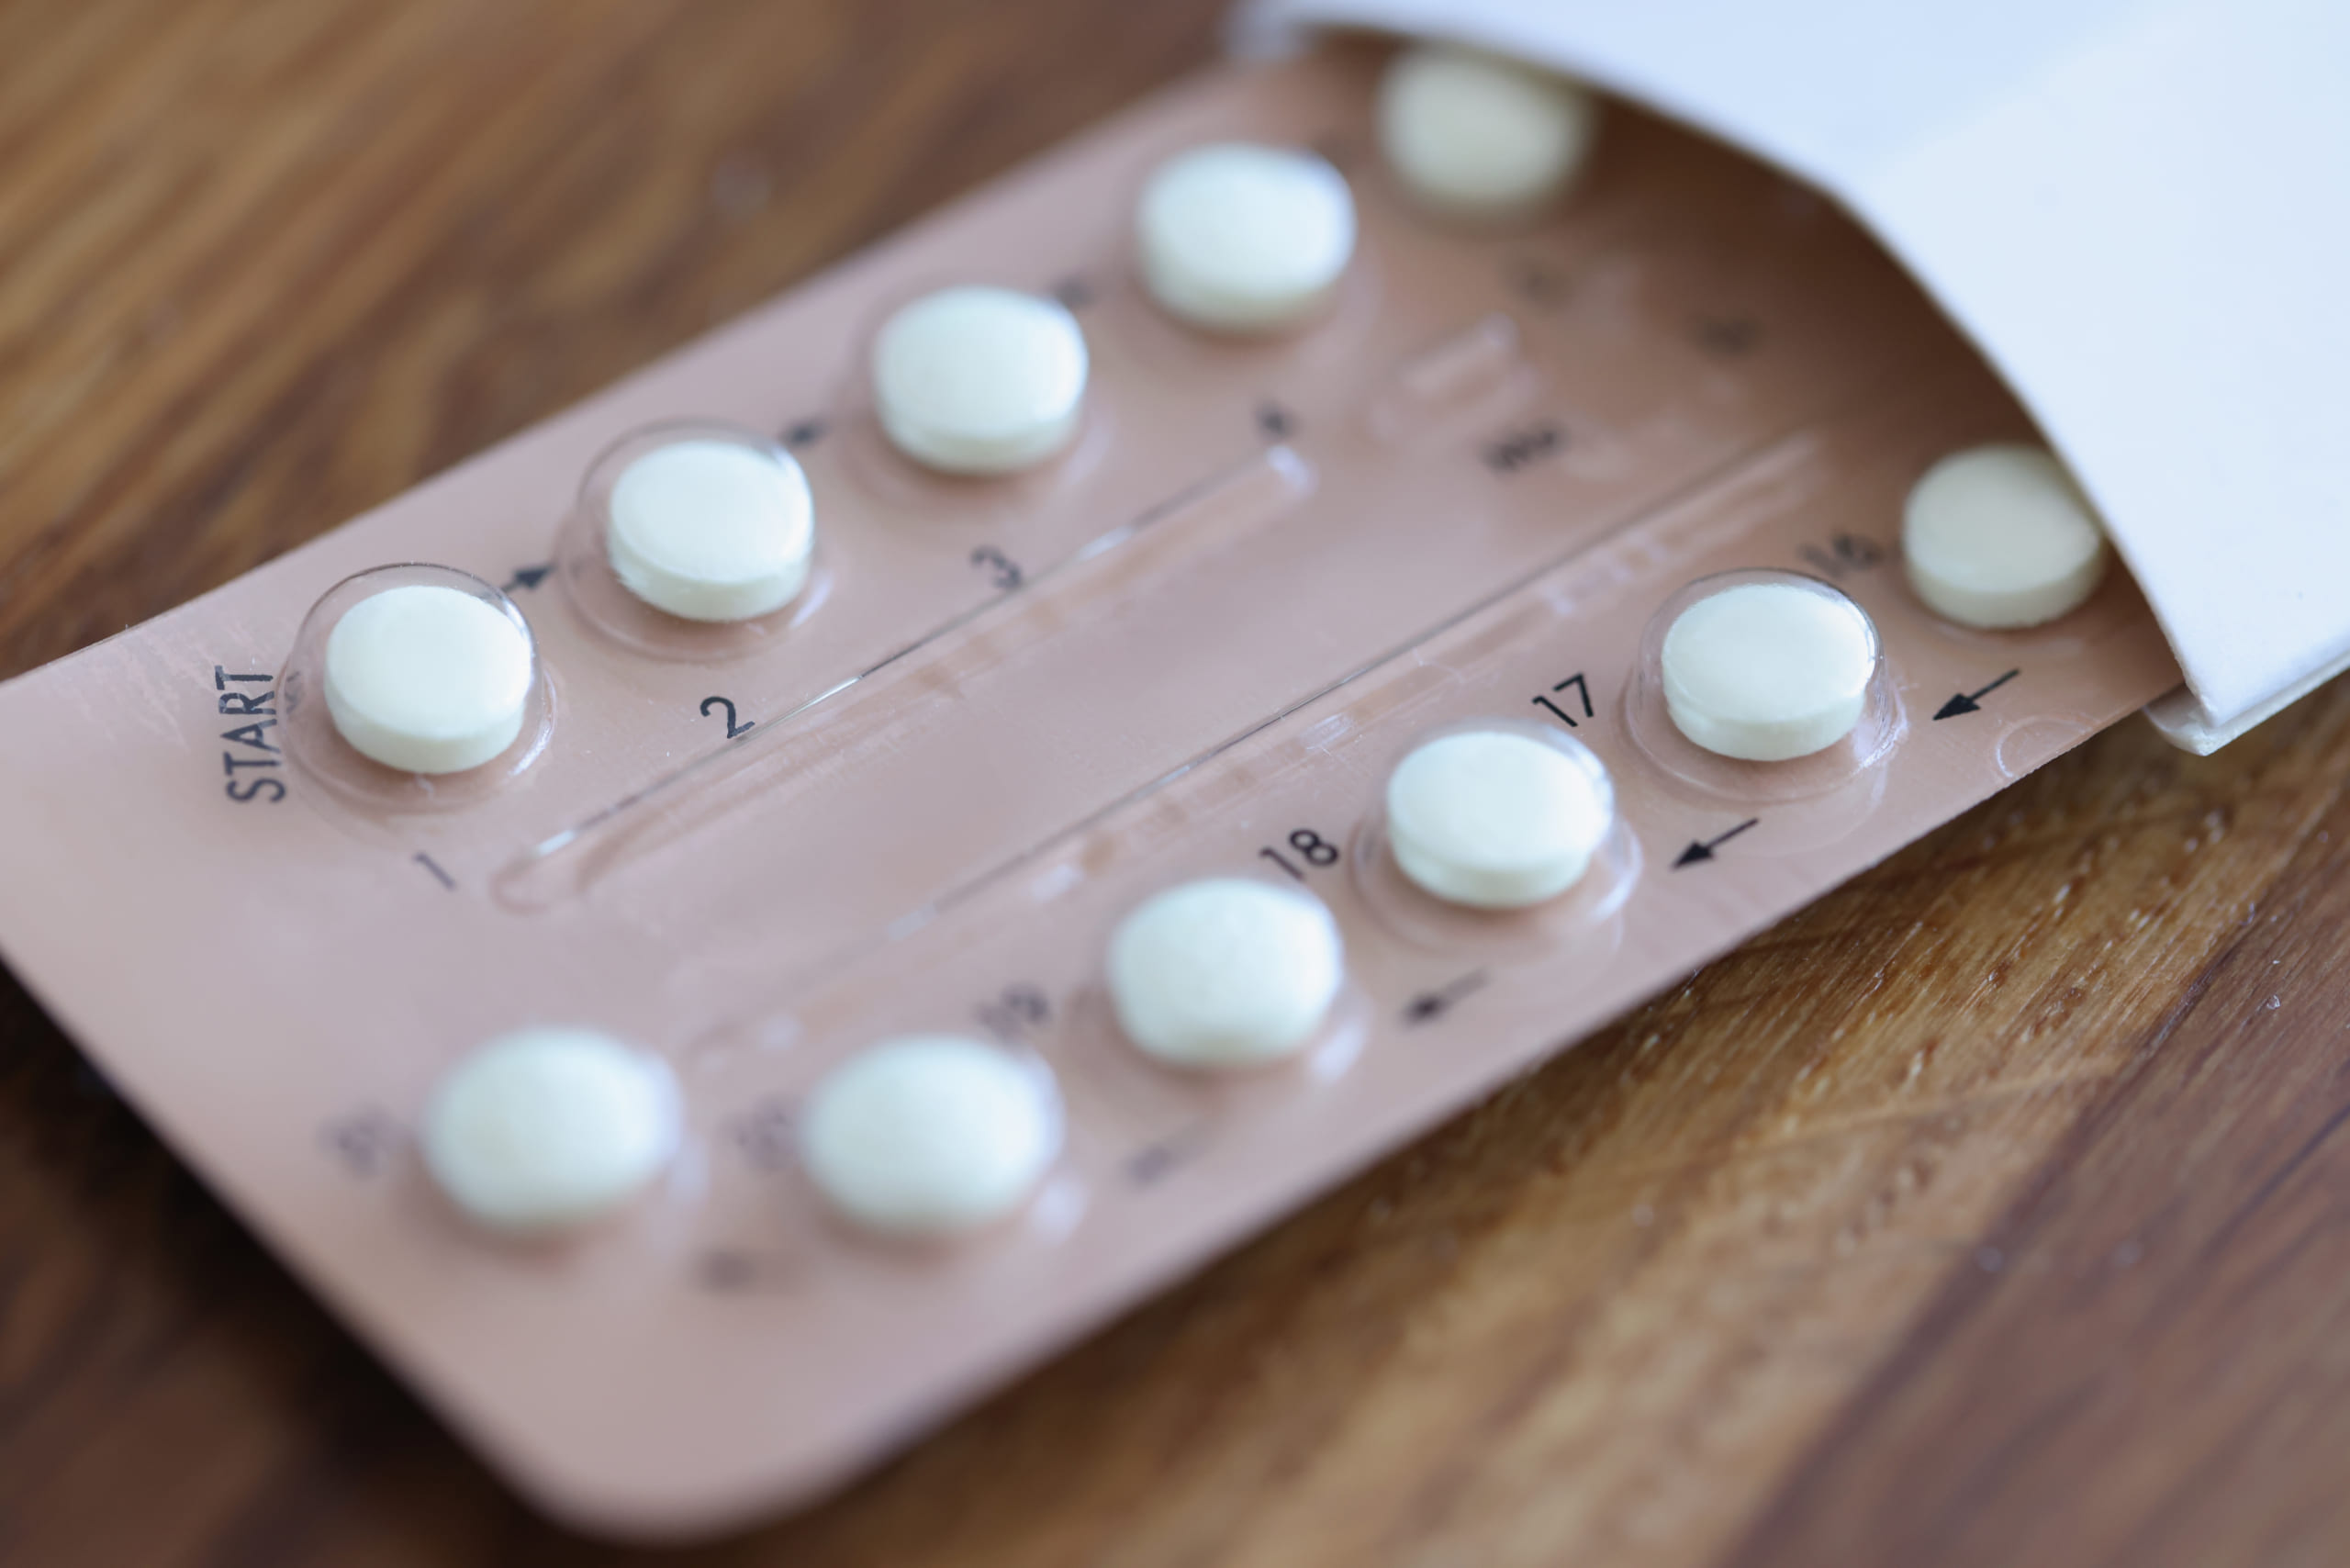 Birth Control Pills in Japan